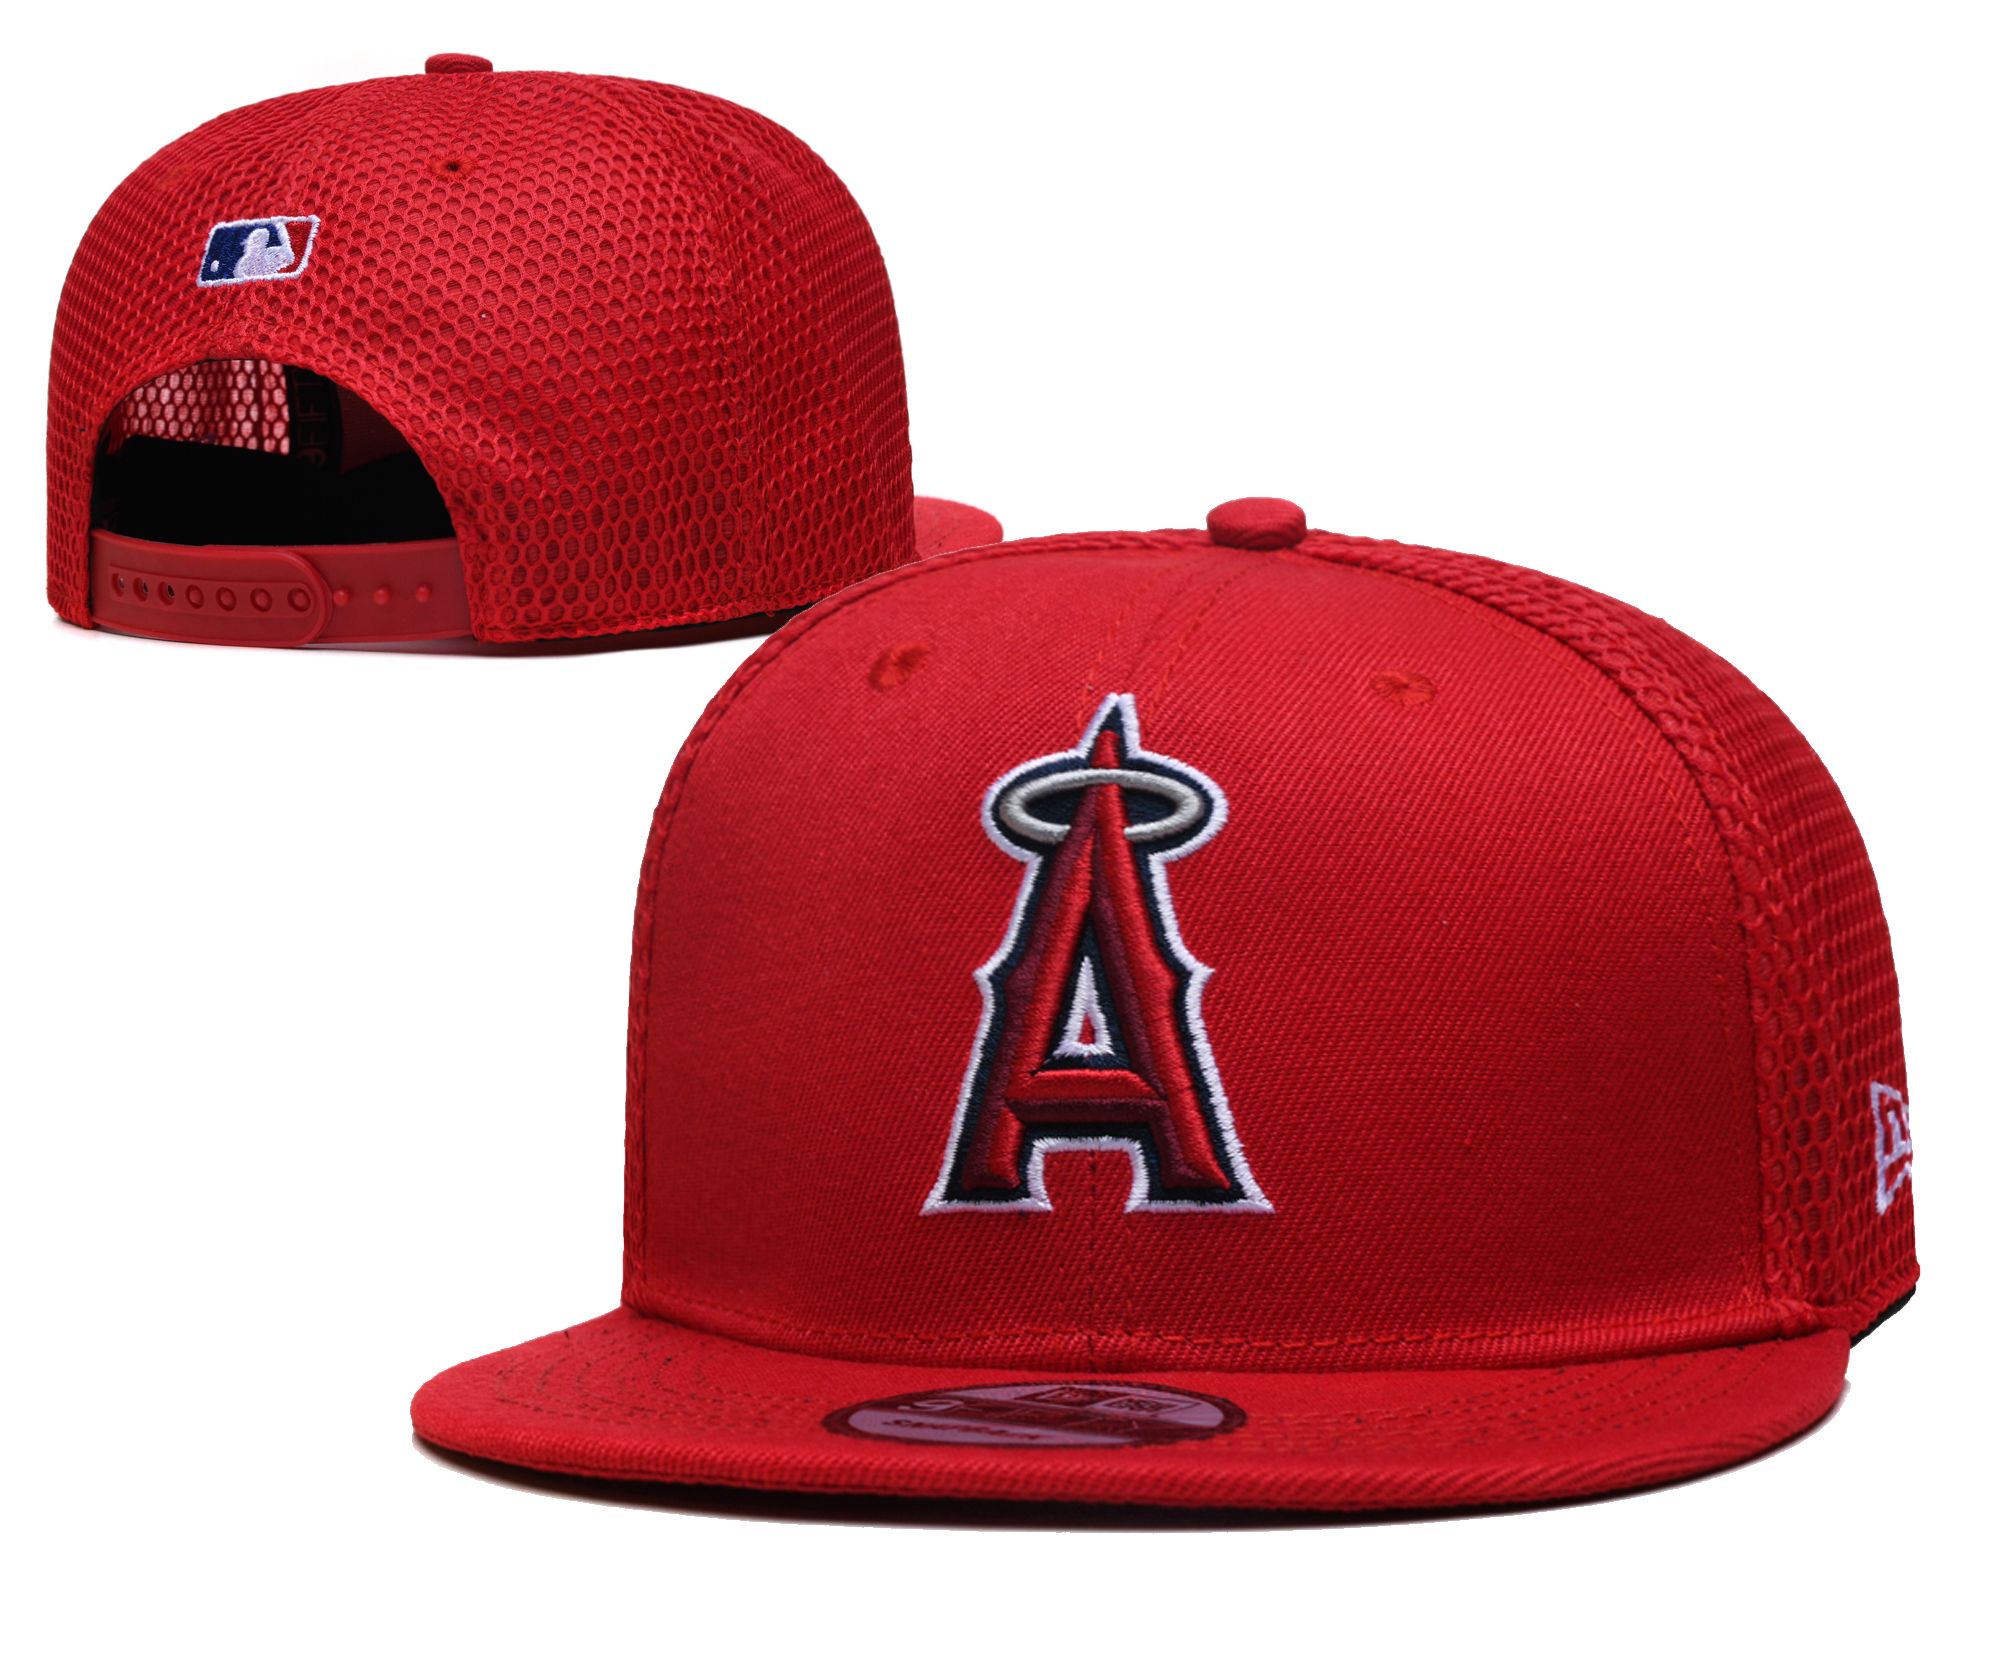 2021 MLB Los Angeles Angels #19 TX hat